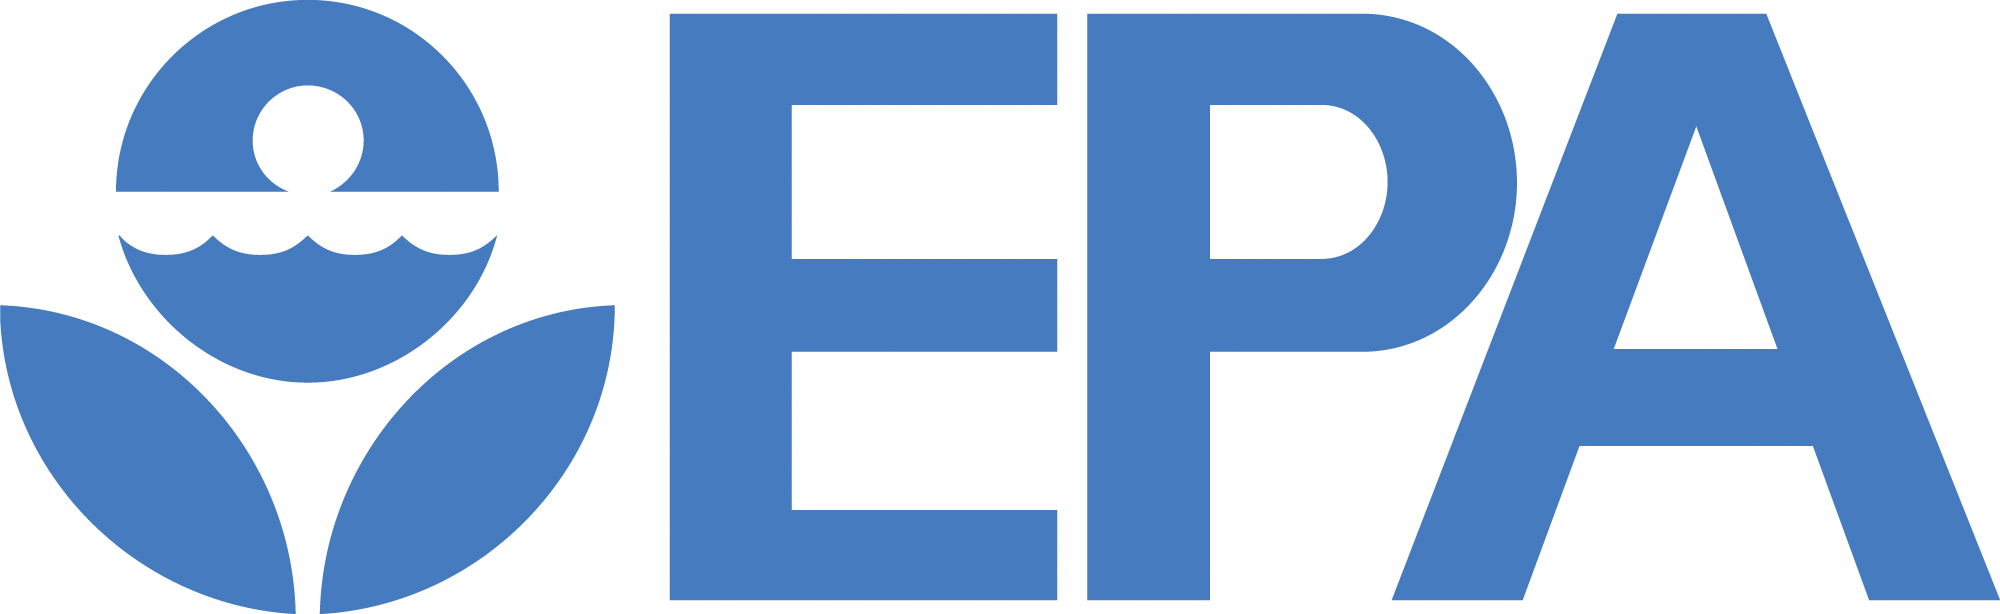 blue epa logo iron on transfers